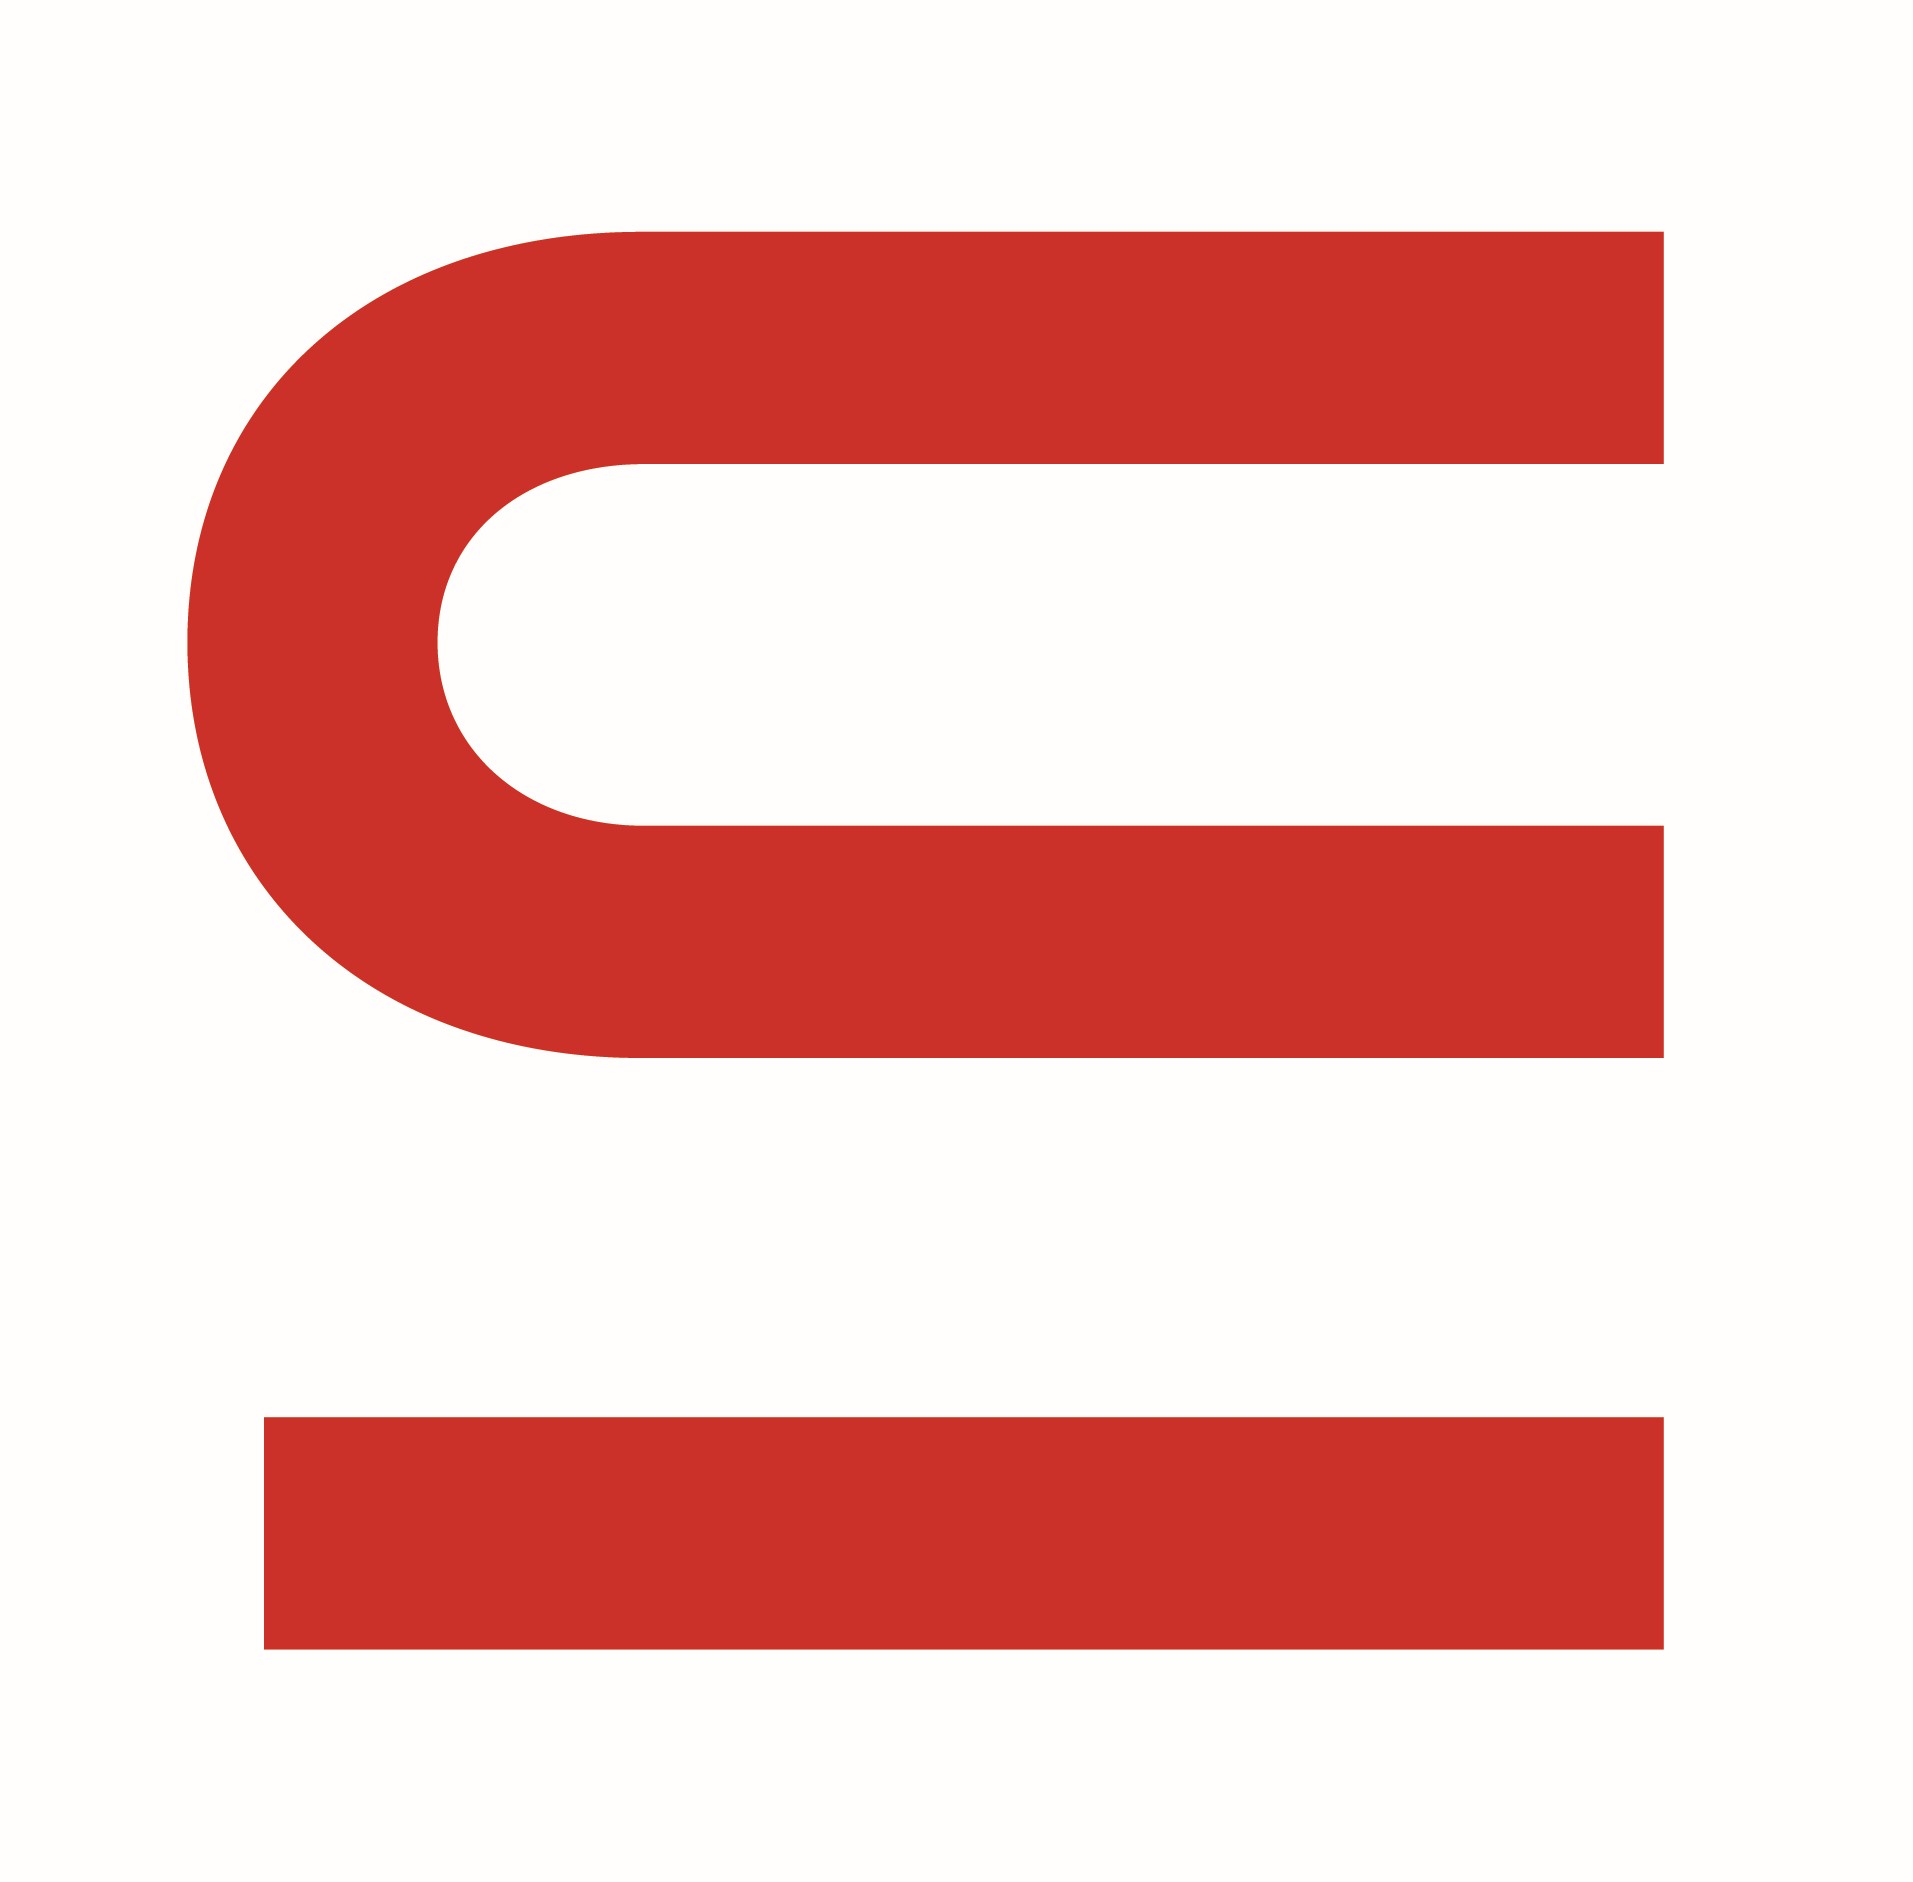 swisslog_logo_1_red_cmyk